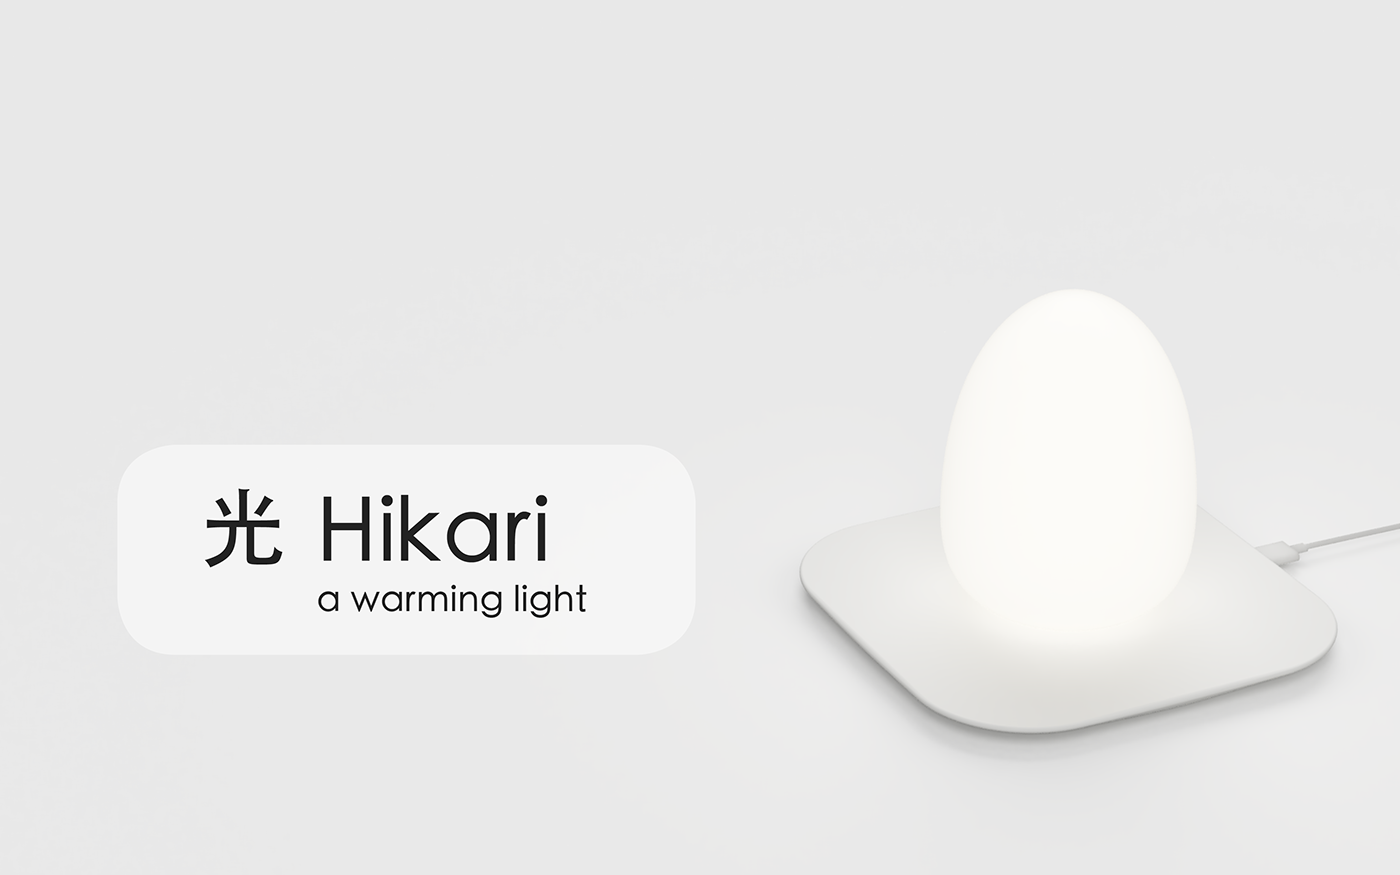 jasonxuyang light sad stress relief warm interaction app egg comfort user experience